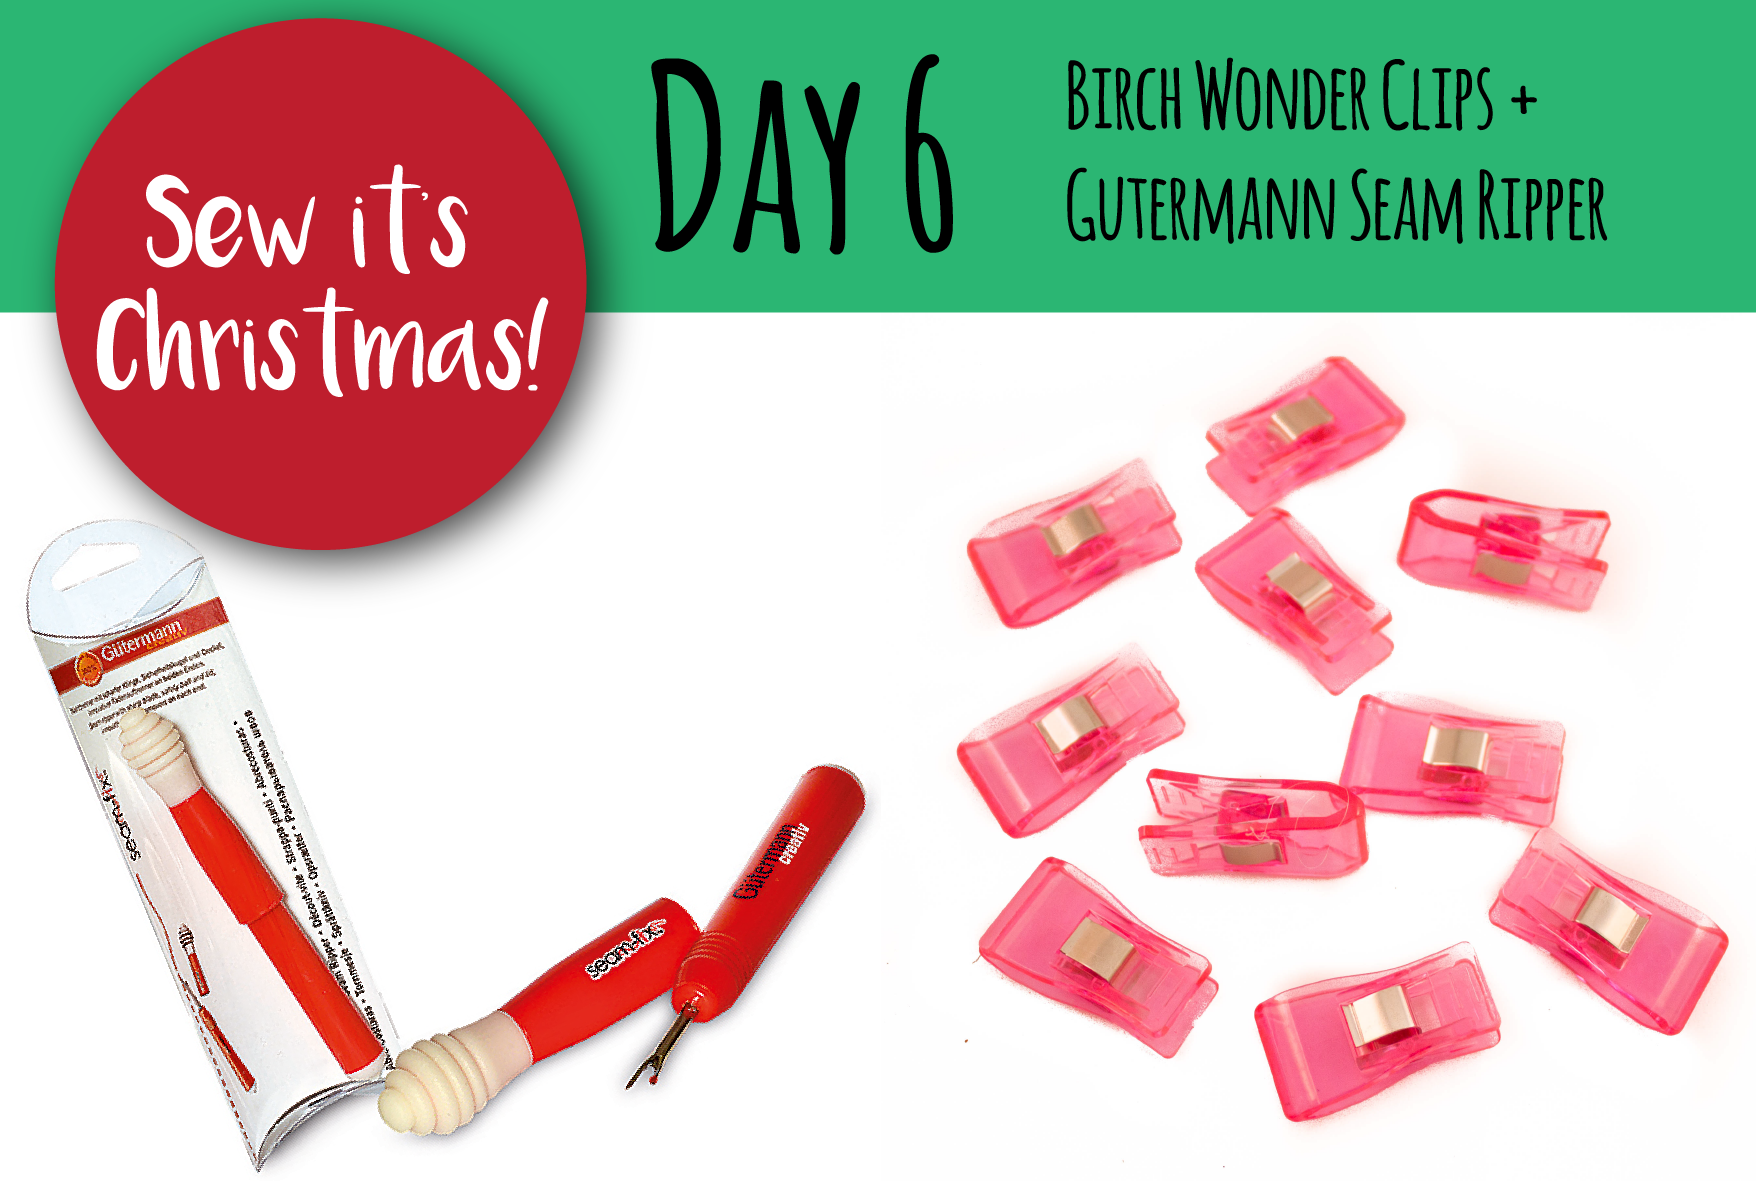 SEW IT'S CHRISTMAS - Day 6: Birch Wonder Clips + Gütermann Seam Ripper